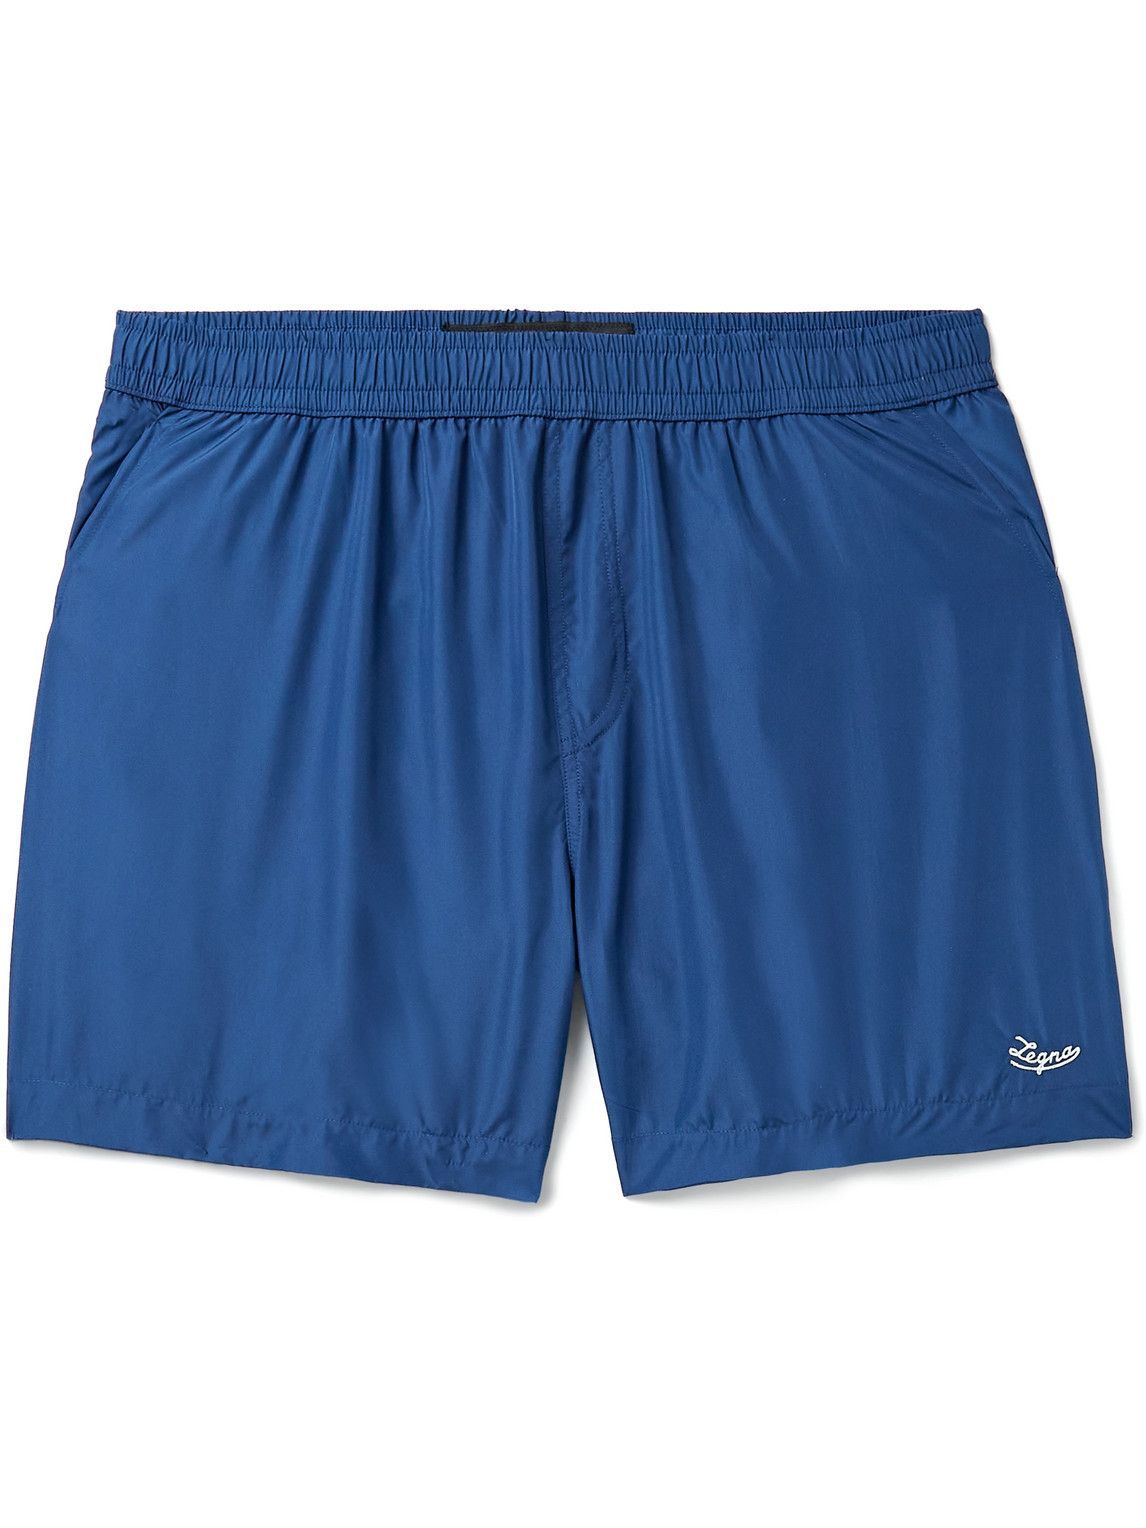 Zegna - Slim-Fit Mid-Length Swim Shorts - Blue